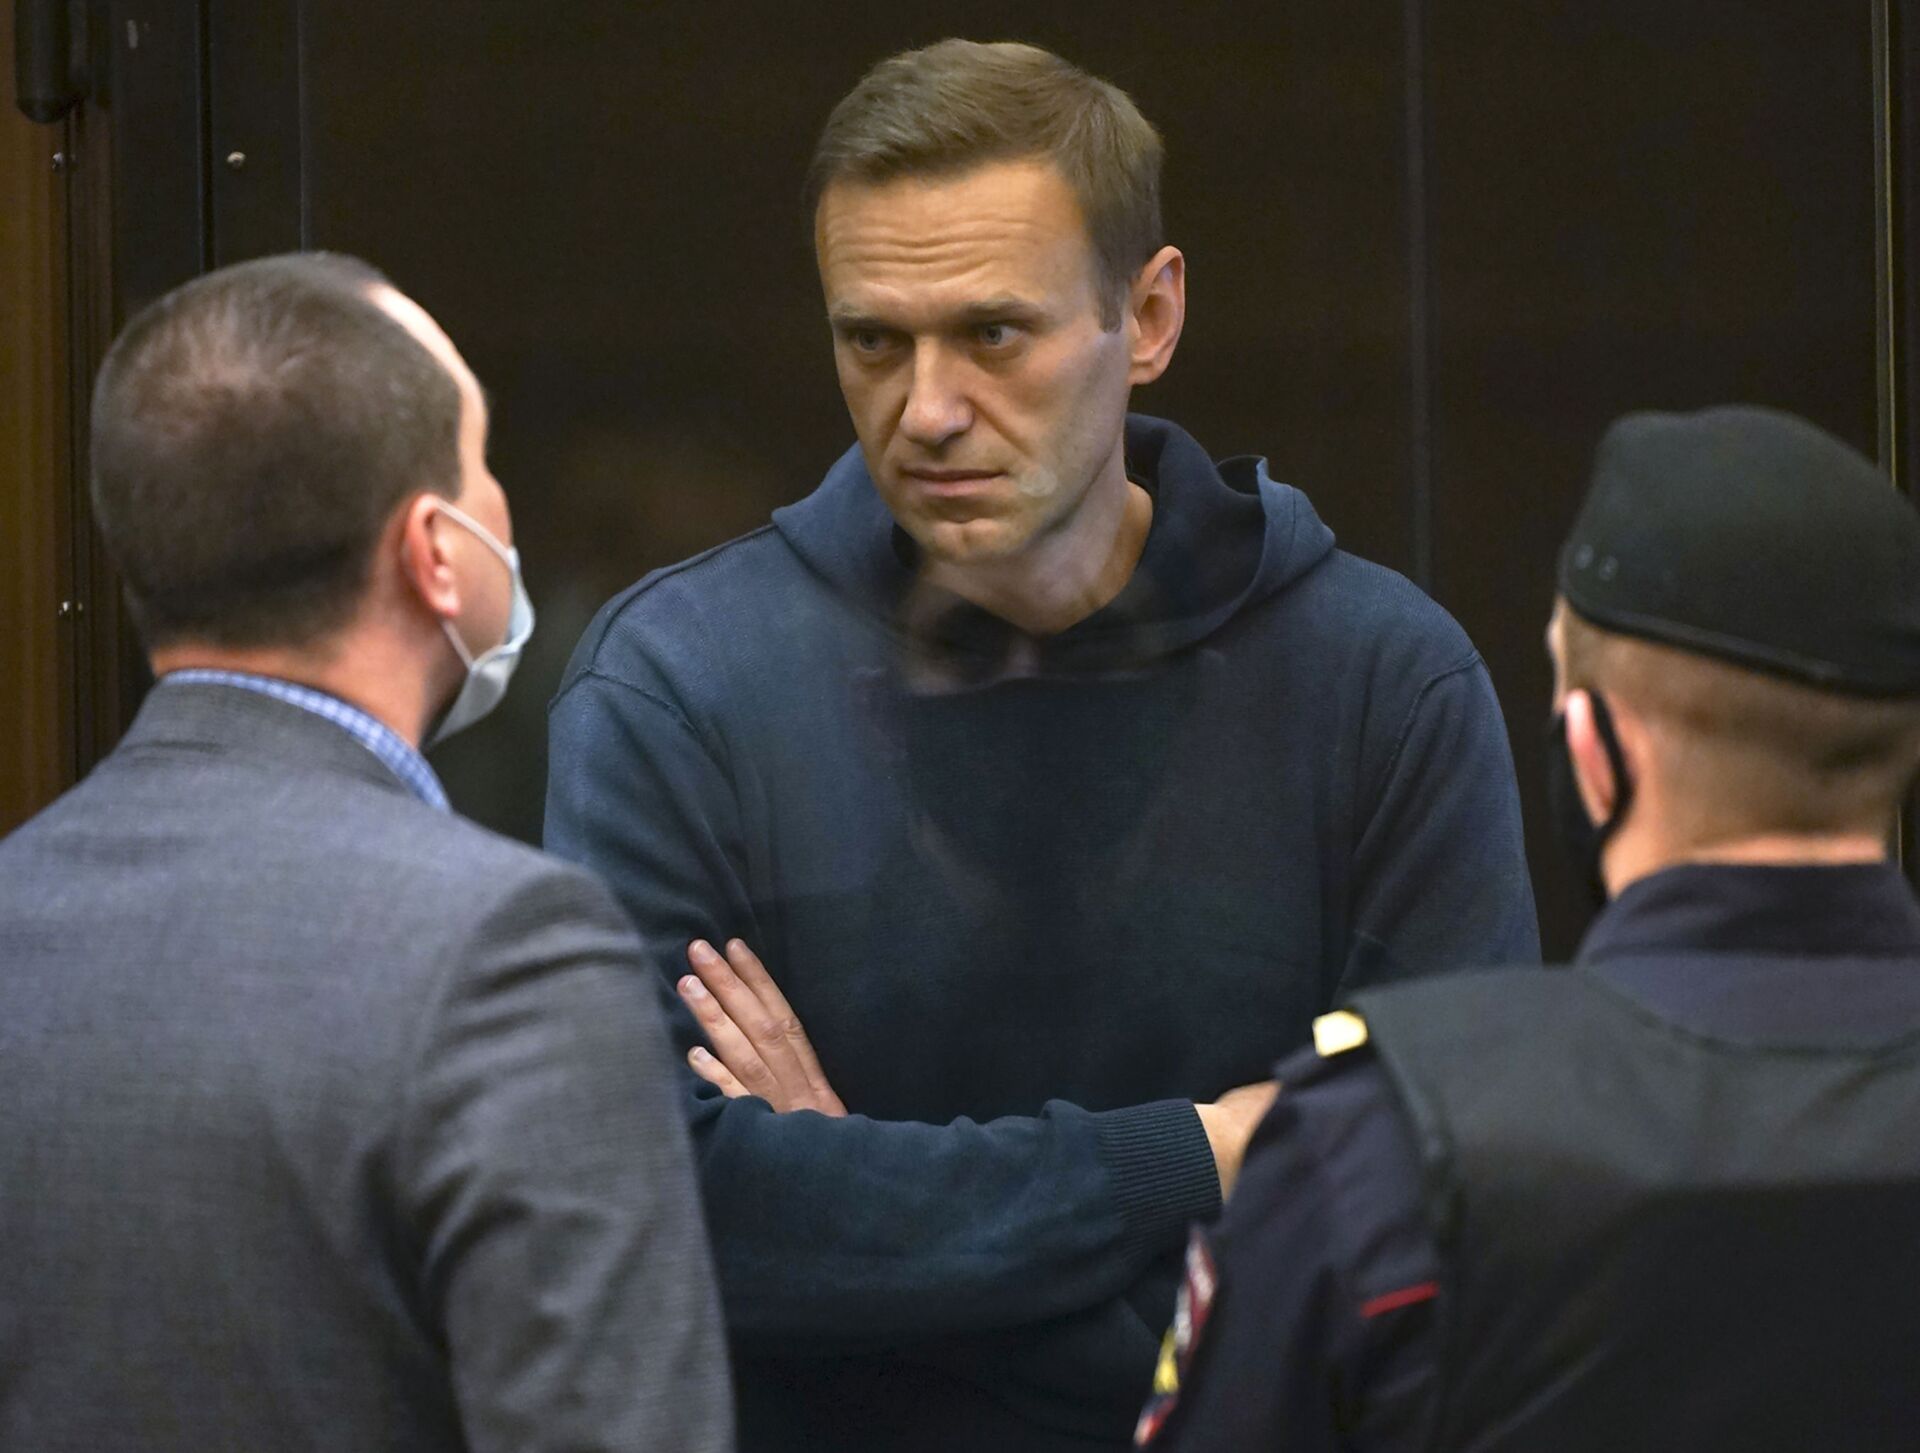 Russian Opposition Figure Navalny Files Three Lawsuits Against Prison - Sputnik International, 1920, 26.04.2021